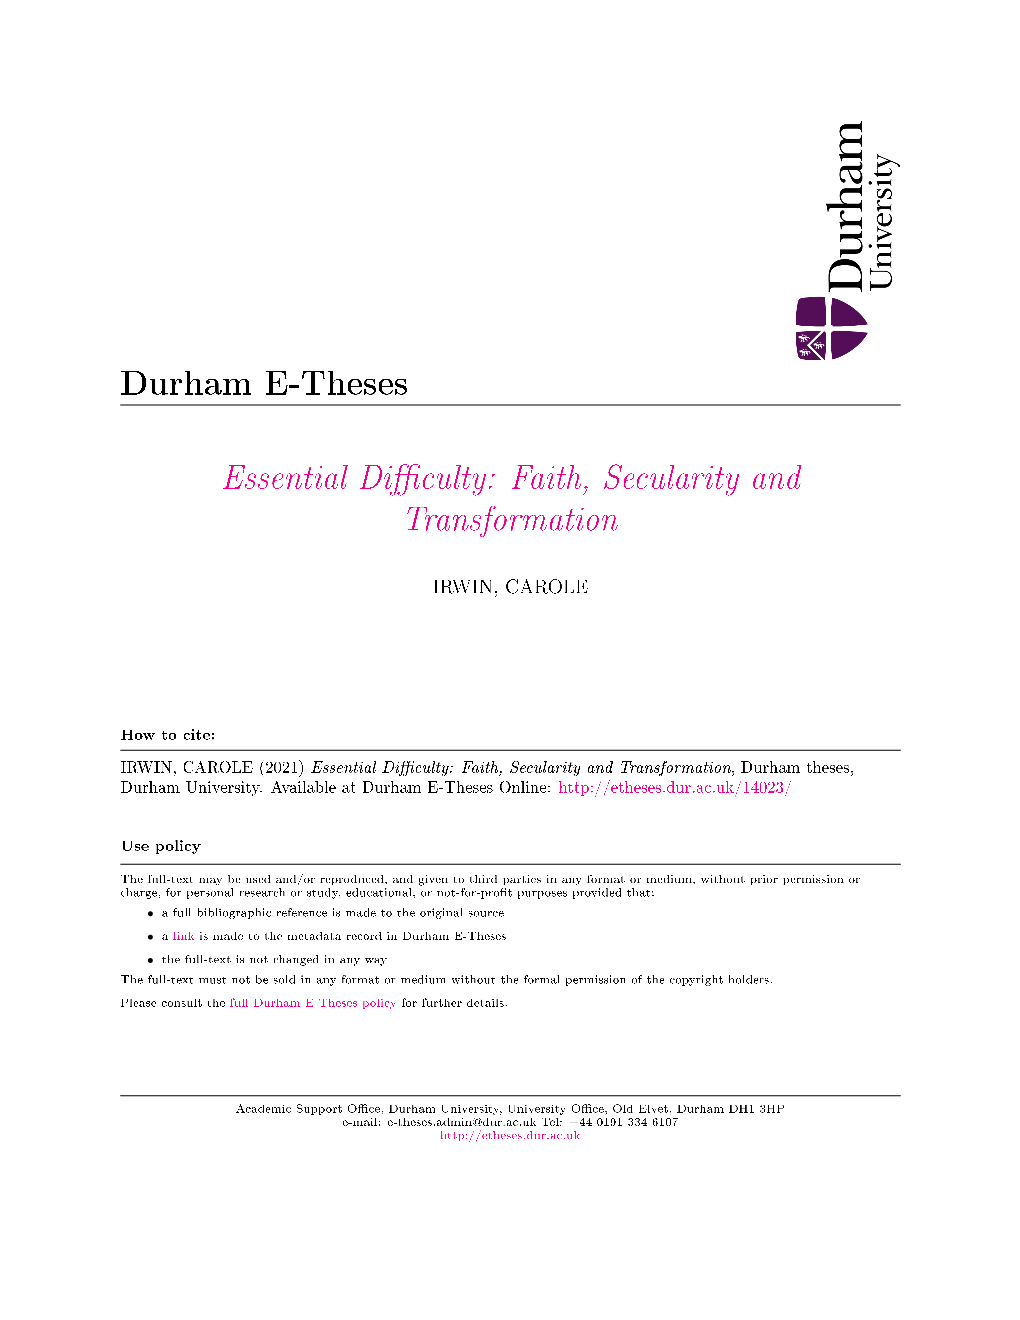 Essential Difficulty: Faith, Secularity And